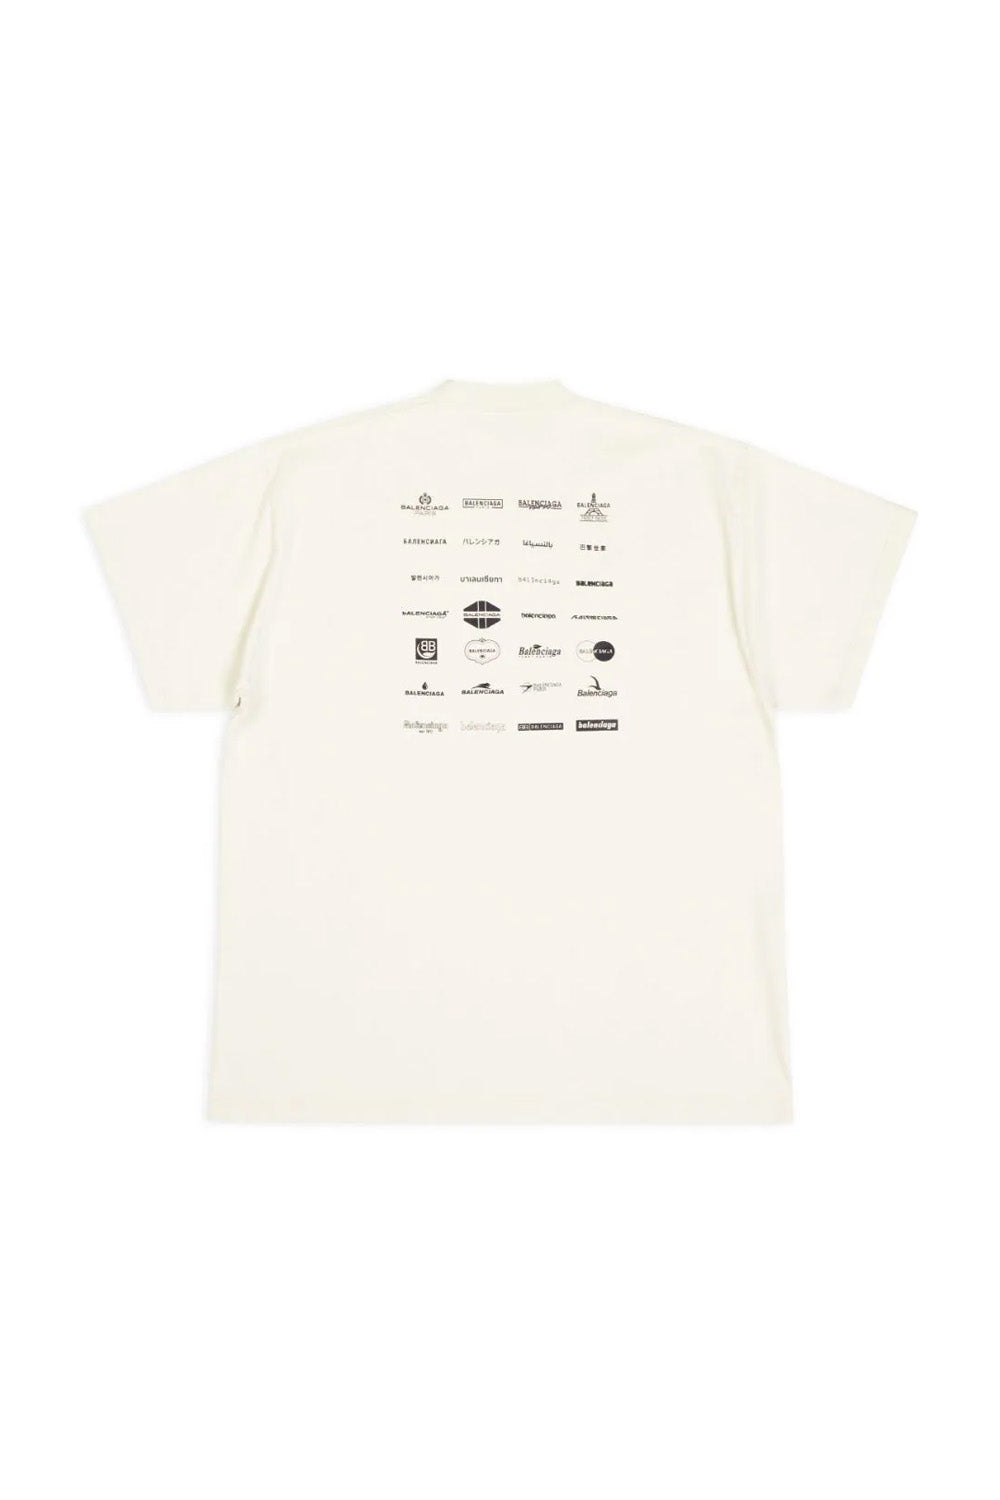 Balenciaga Archives logos T-shirt Light Beige